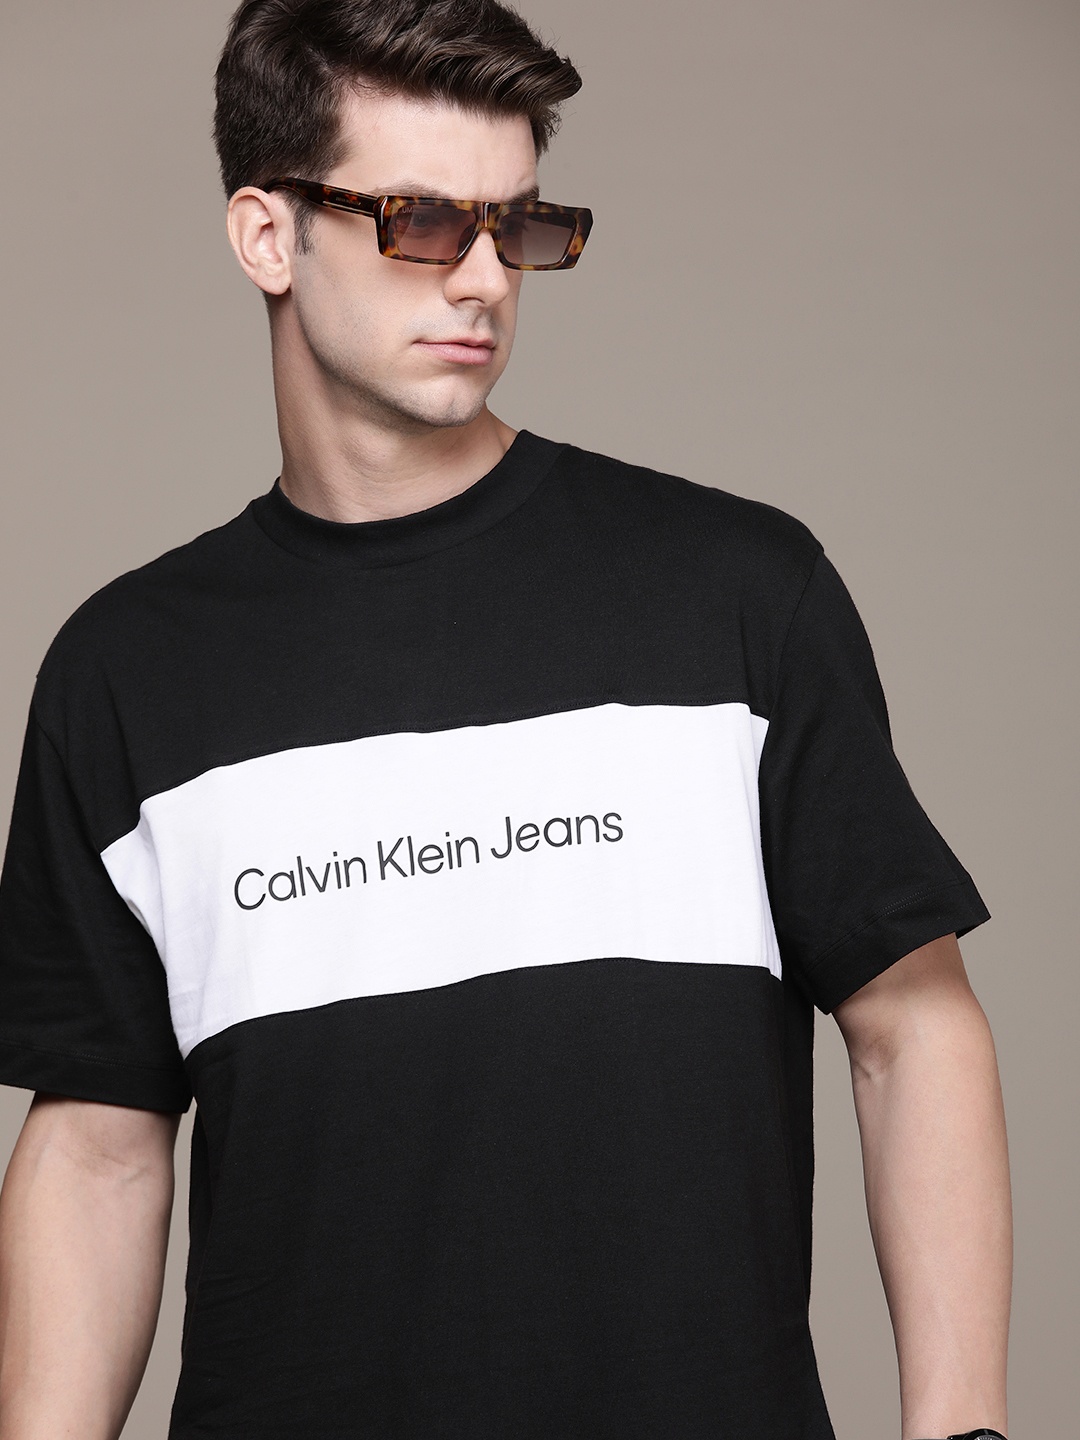 

Calvin Klein Jeans Colourblocked Pure Cotton Boxy T-shirt, Black